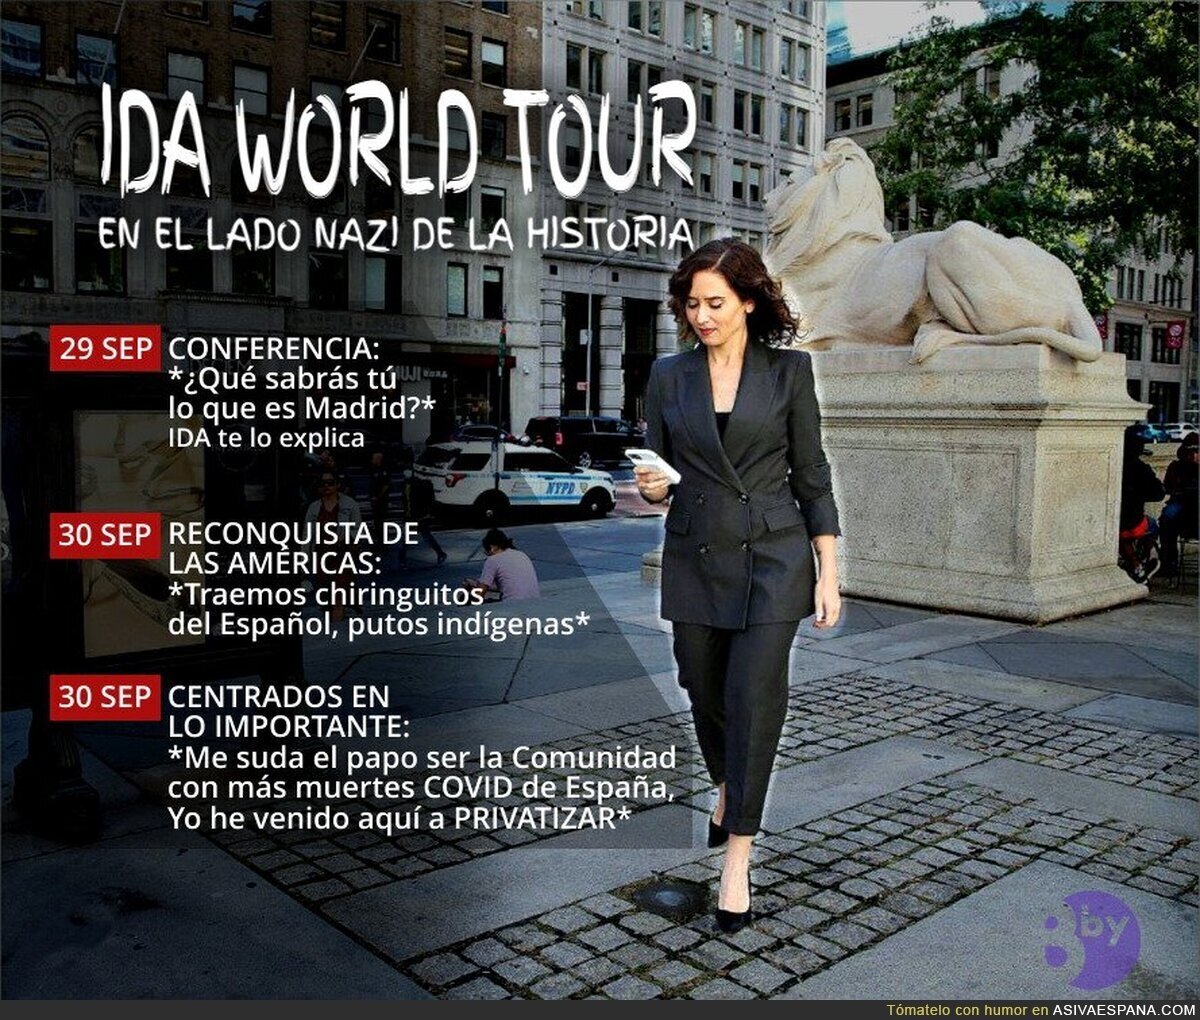 IDA WORLD TOUR